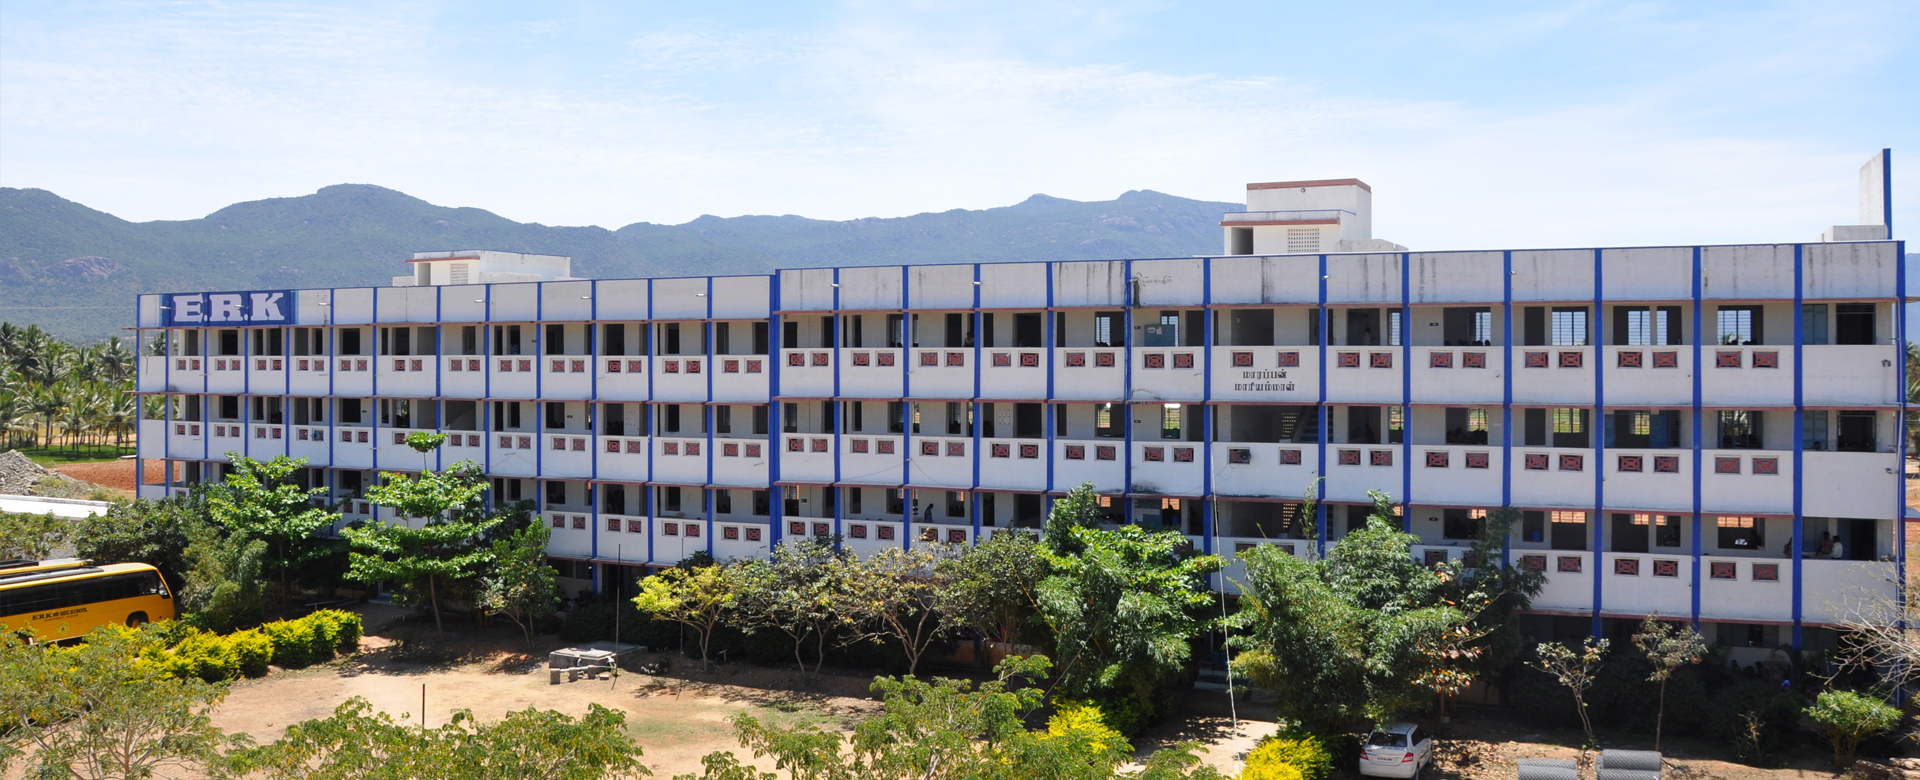 E.R.K Arts and Science College, Dharmapuri